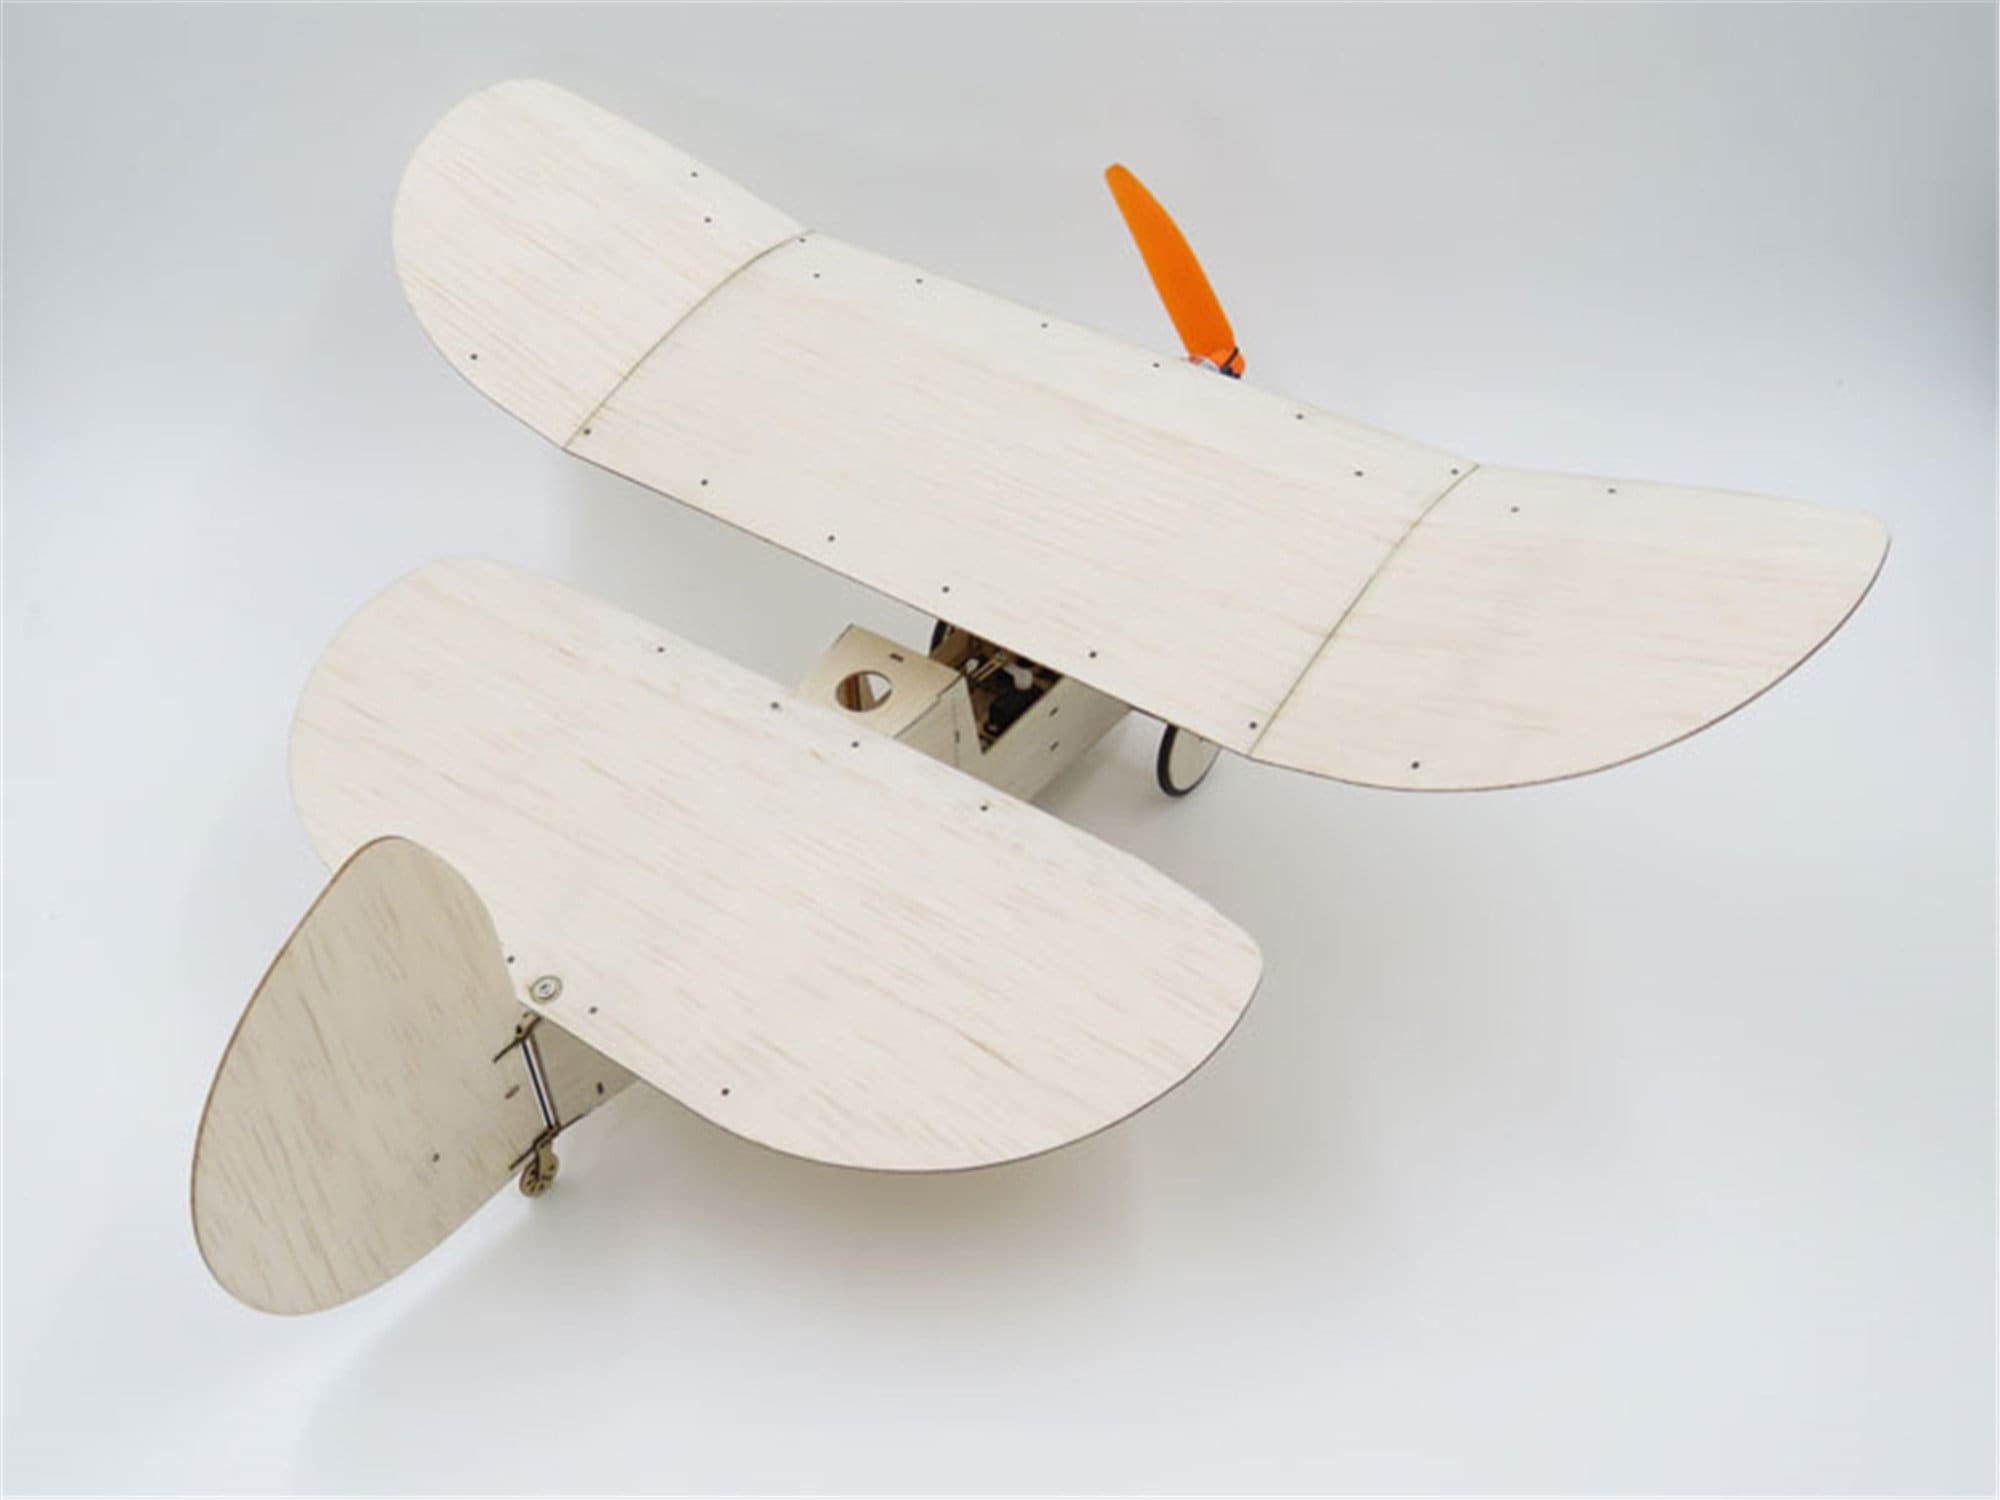 K7 Dancing Wings Hobby Ultra-micro Balsawood Airplane Newton Kit 358mm ...